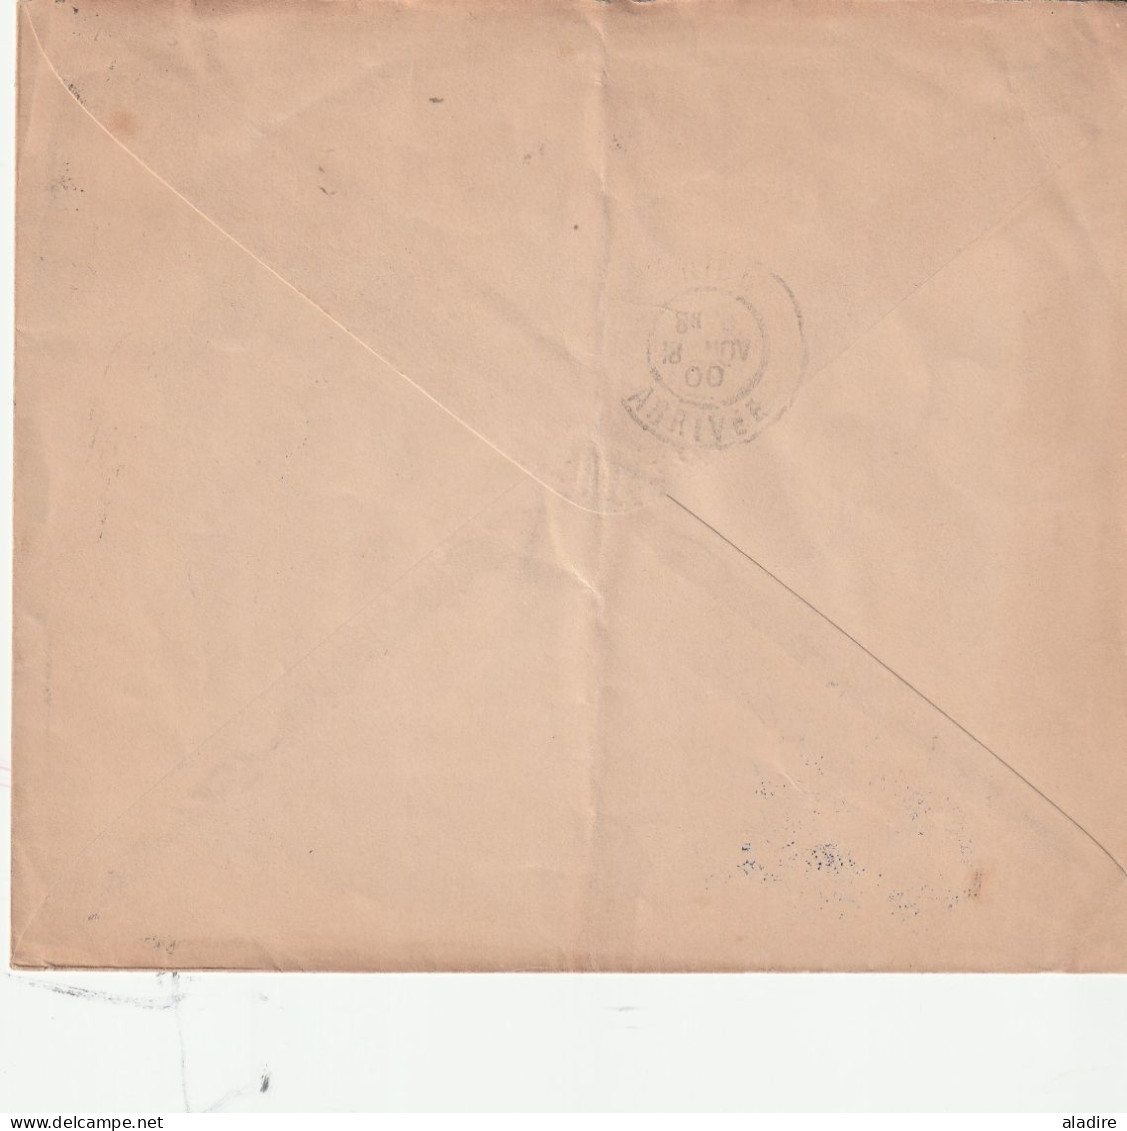 1840 / 1934 - POCZTA POLSKA - POLOGNE - POLAND - lot de 7 lettres, enveloppes  et cartes  - 14 scans